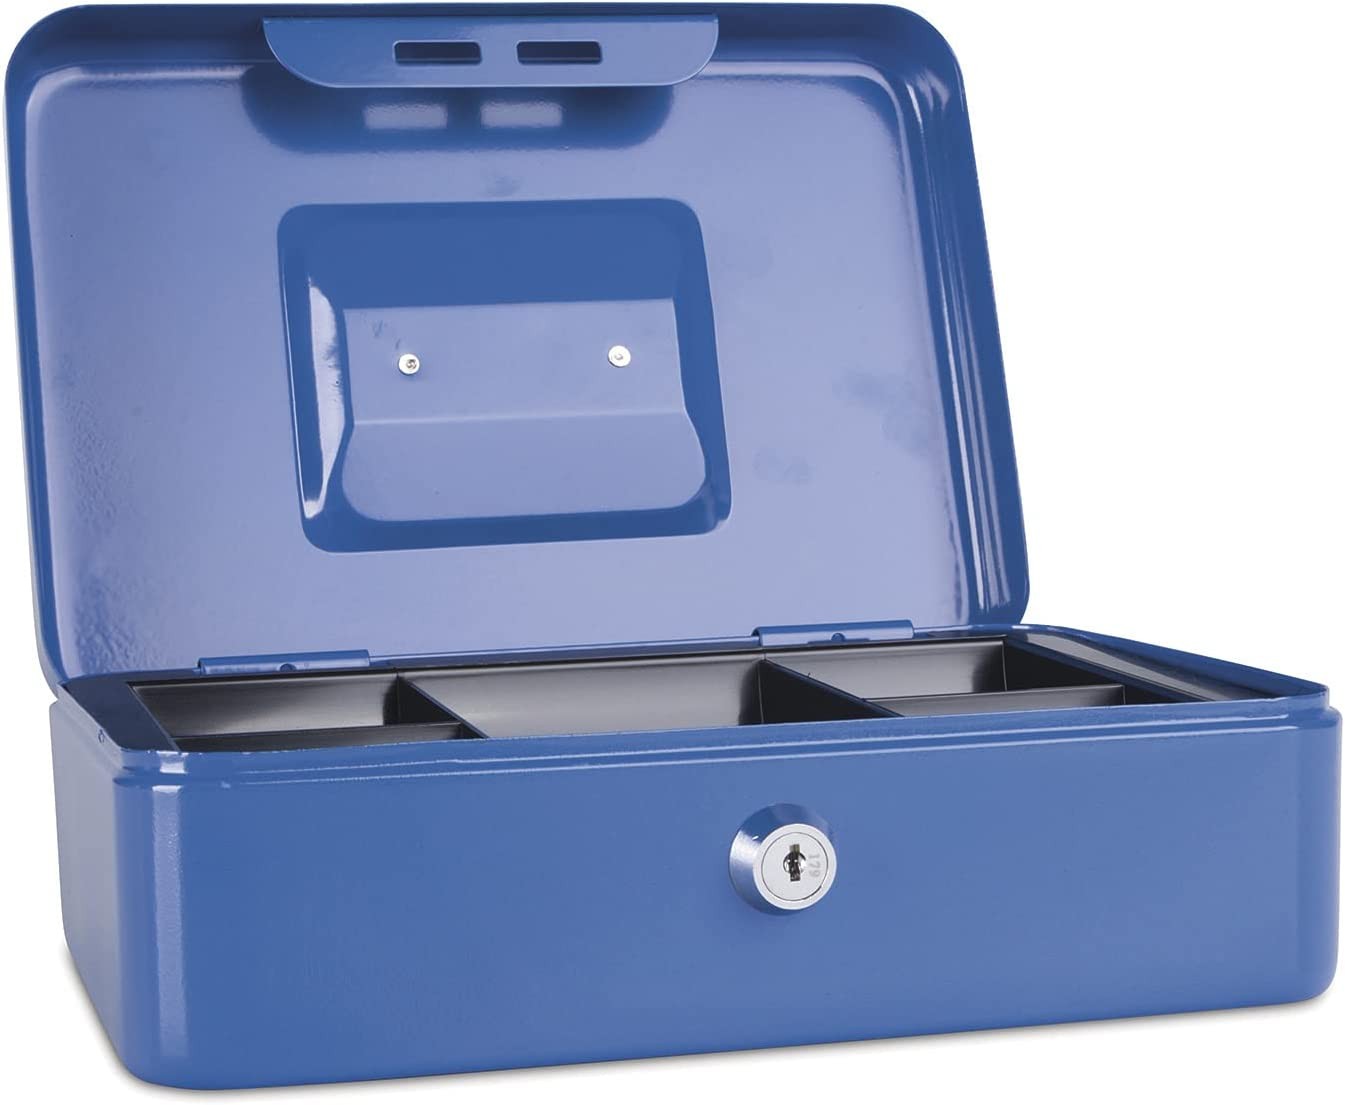 Caseta (cutie) metalica pentru bani, 250 x 180 x 90 mm, DONAU - albastru